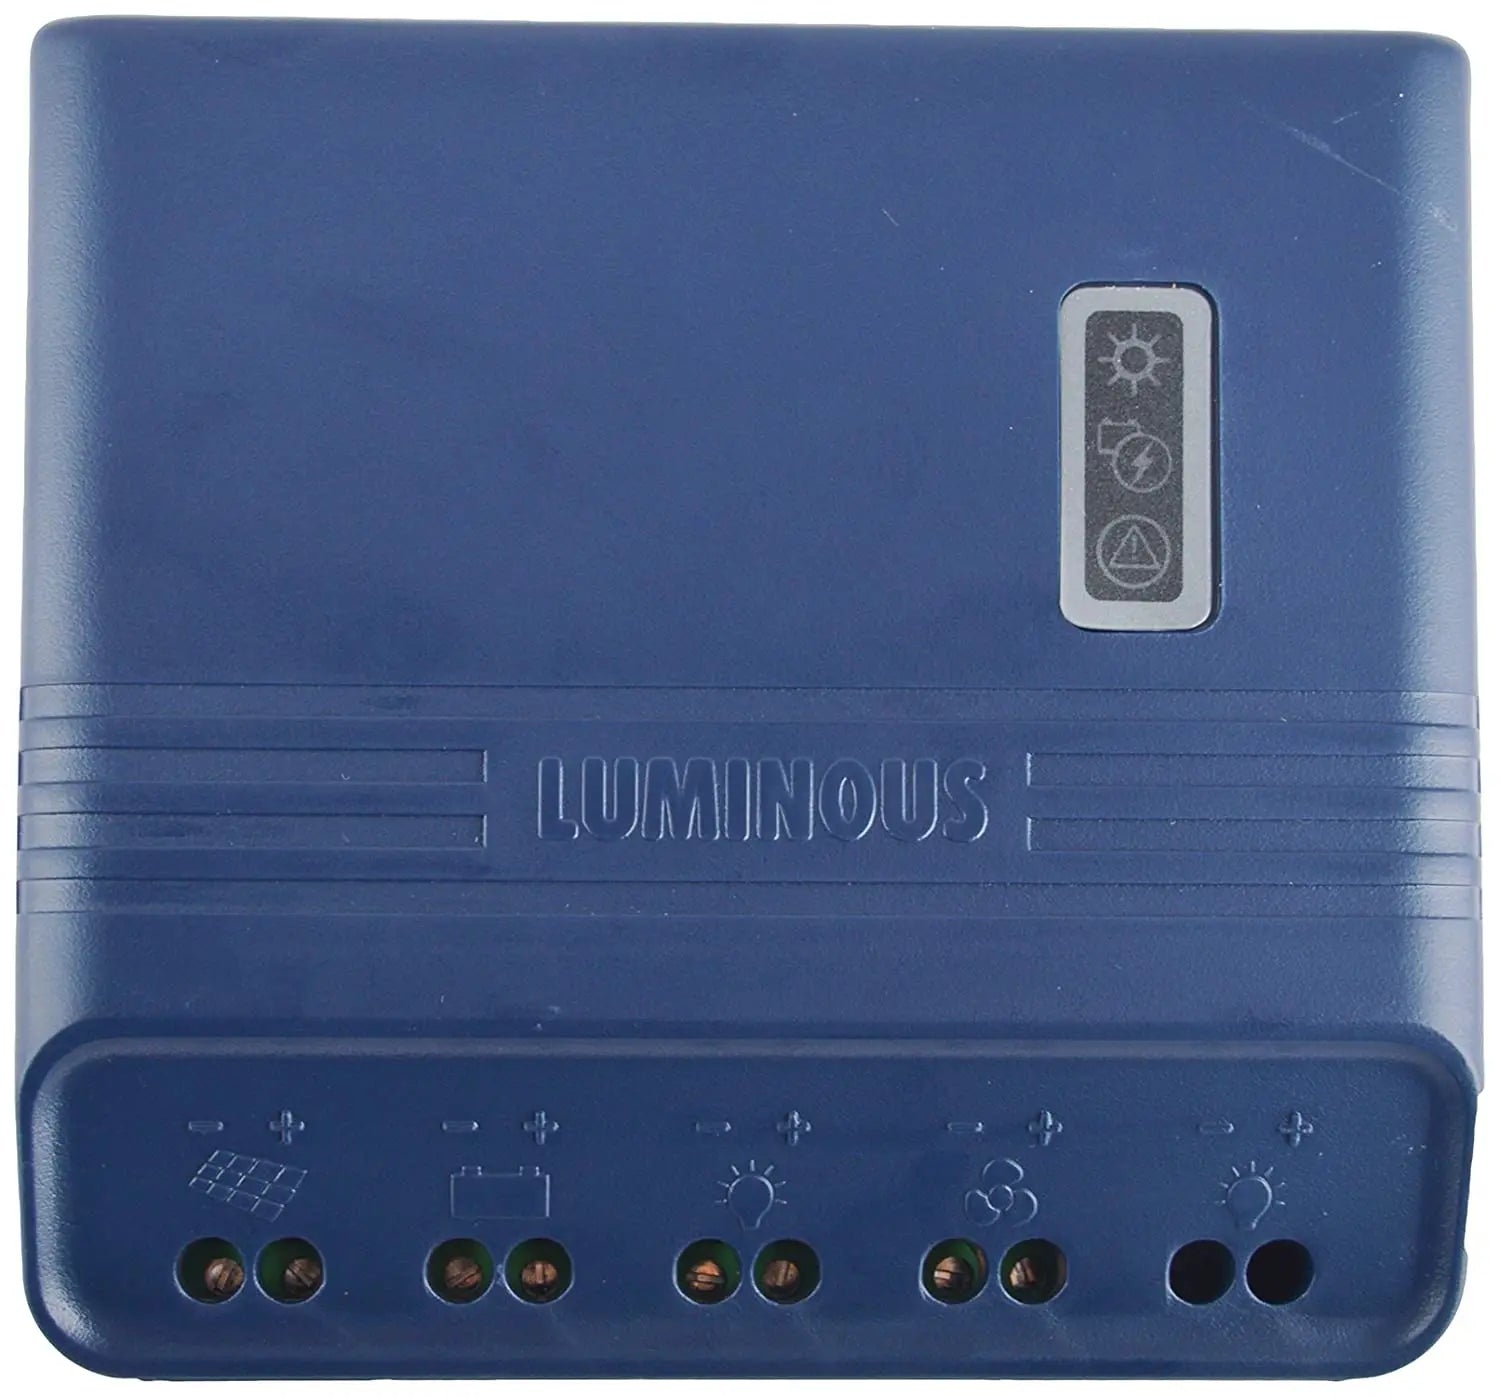 Luminous Solar Charge Controller 6 Amp - Blue, SCC1206 with USB port - Apollo Universe